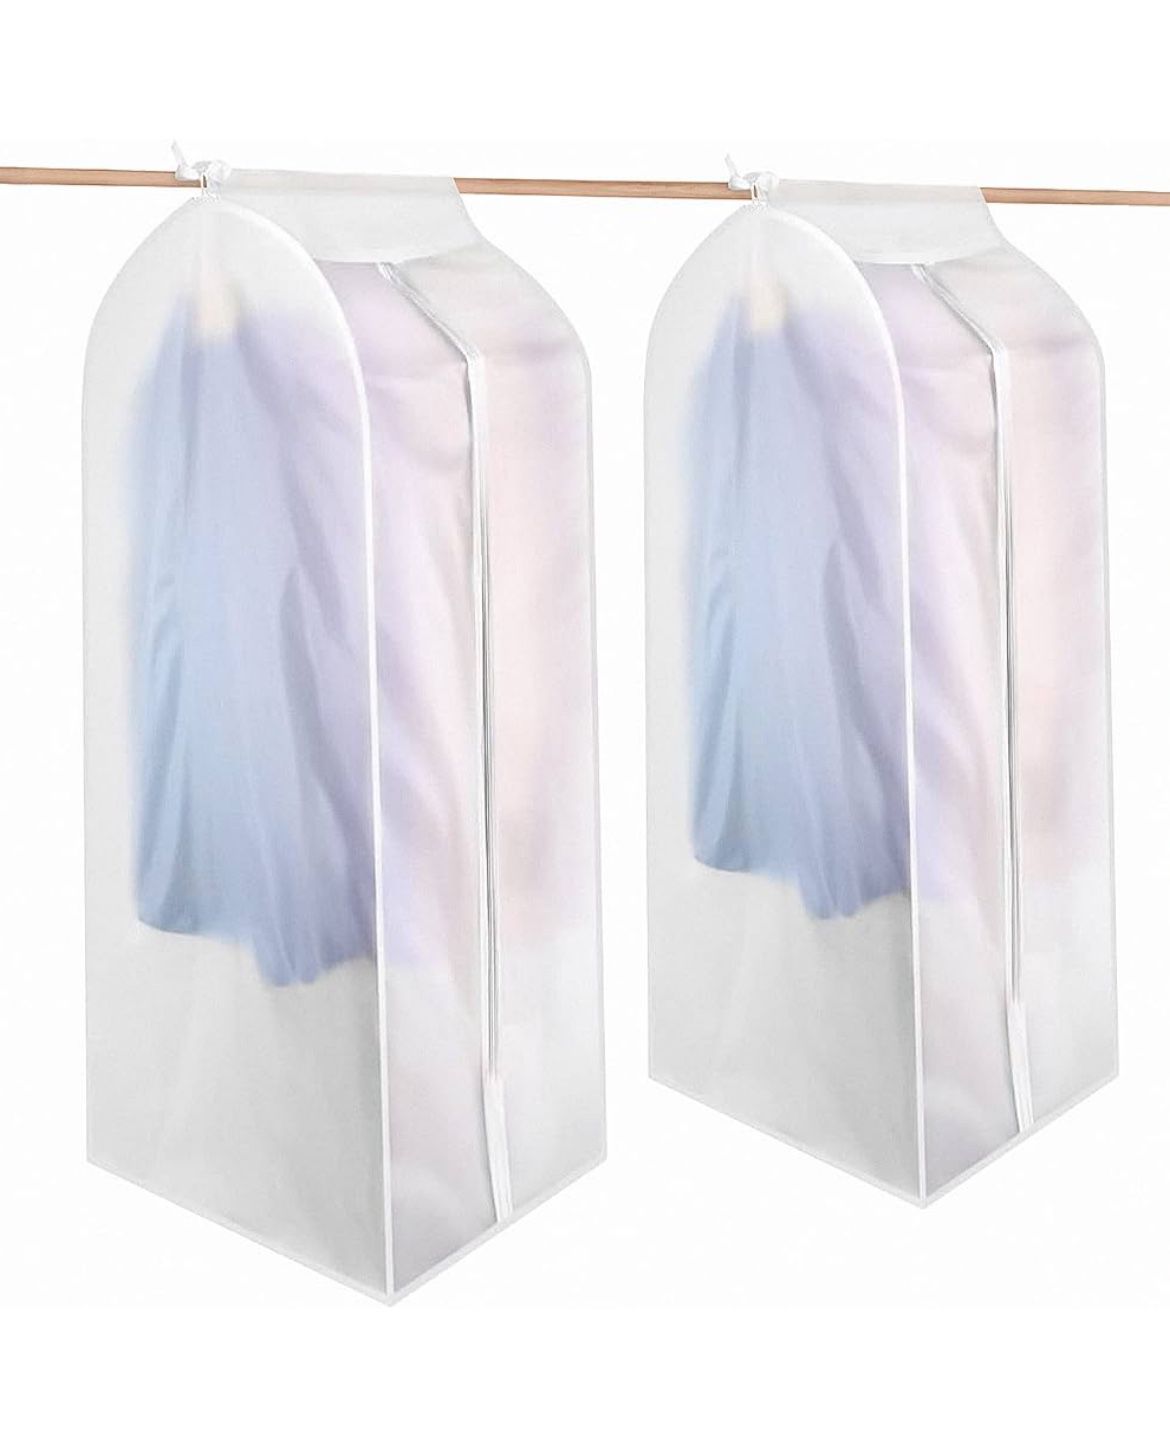 Full-zip Lightweight Translucent Waterproof Hanging Garment Closet Storage Bags, $7 ea or 5/$30